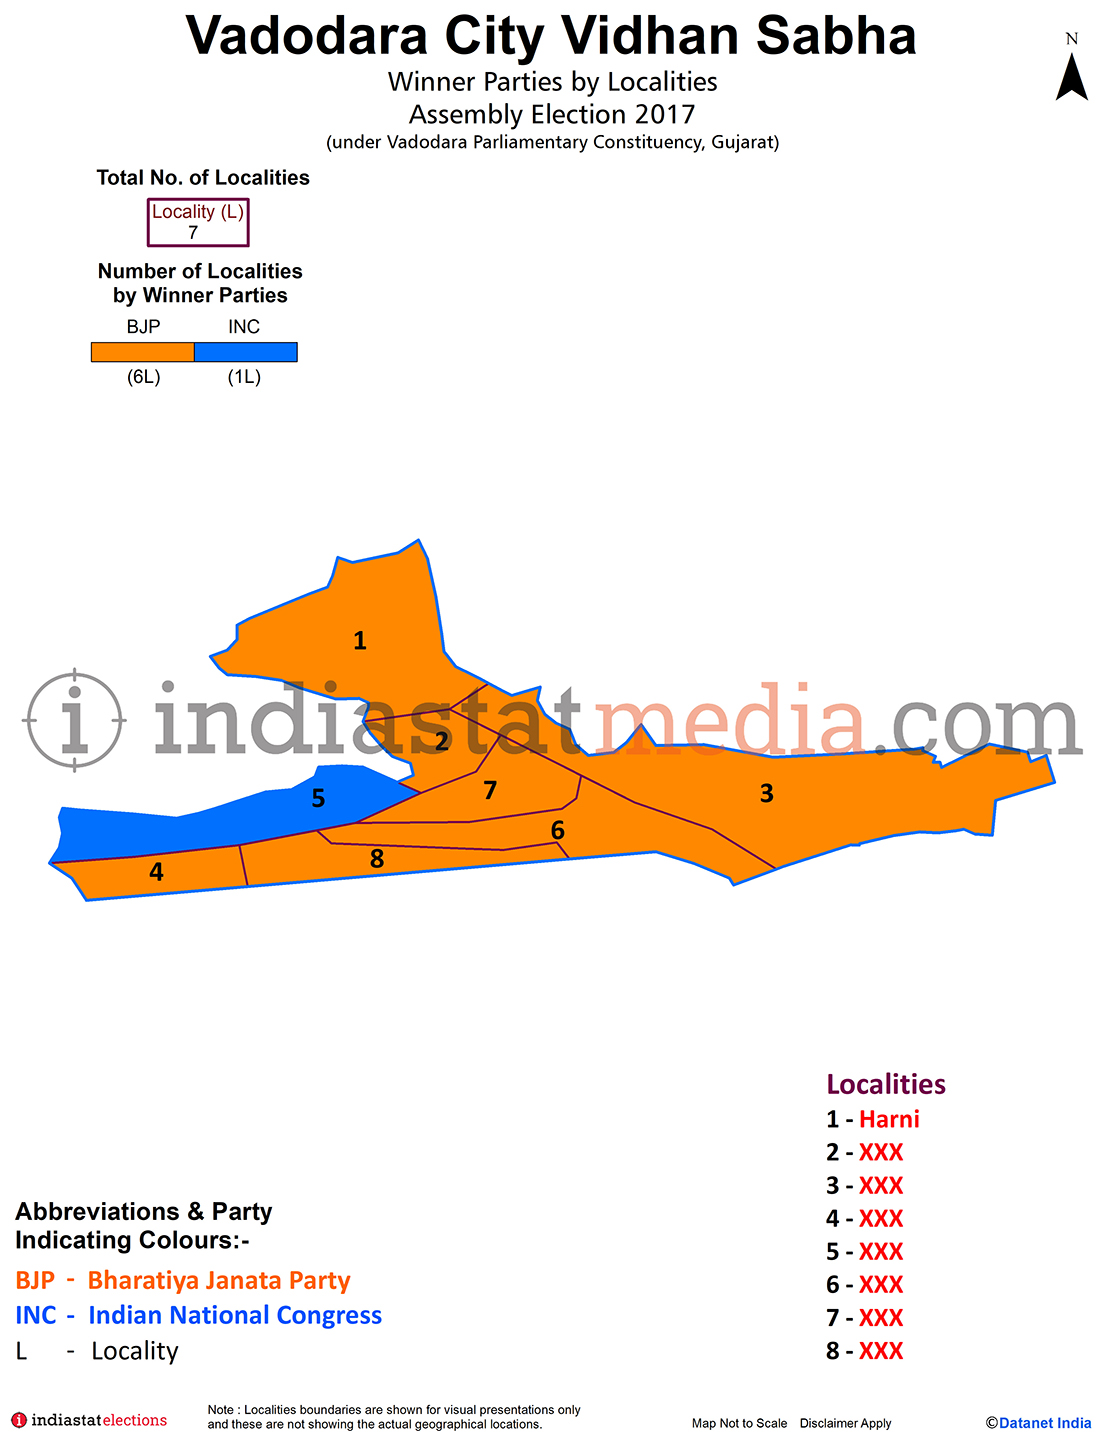 Winner Parties by Localities in Vadodara City Assembly Constituency under Vadodara Parliamentary Constituency in Gujarat (Assembly Election - 2017)